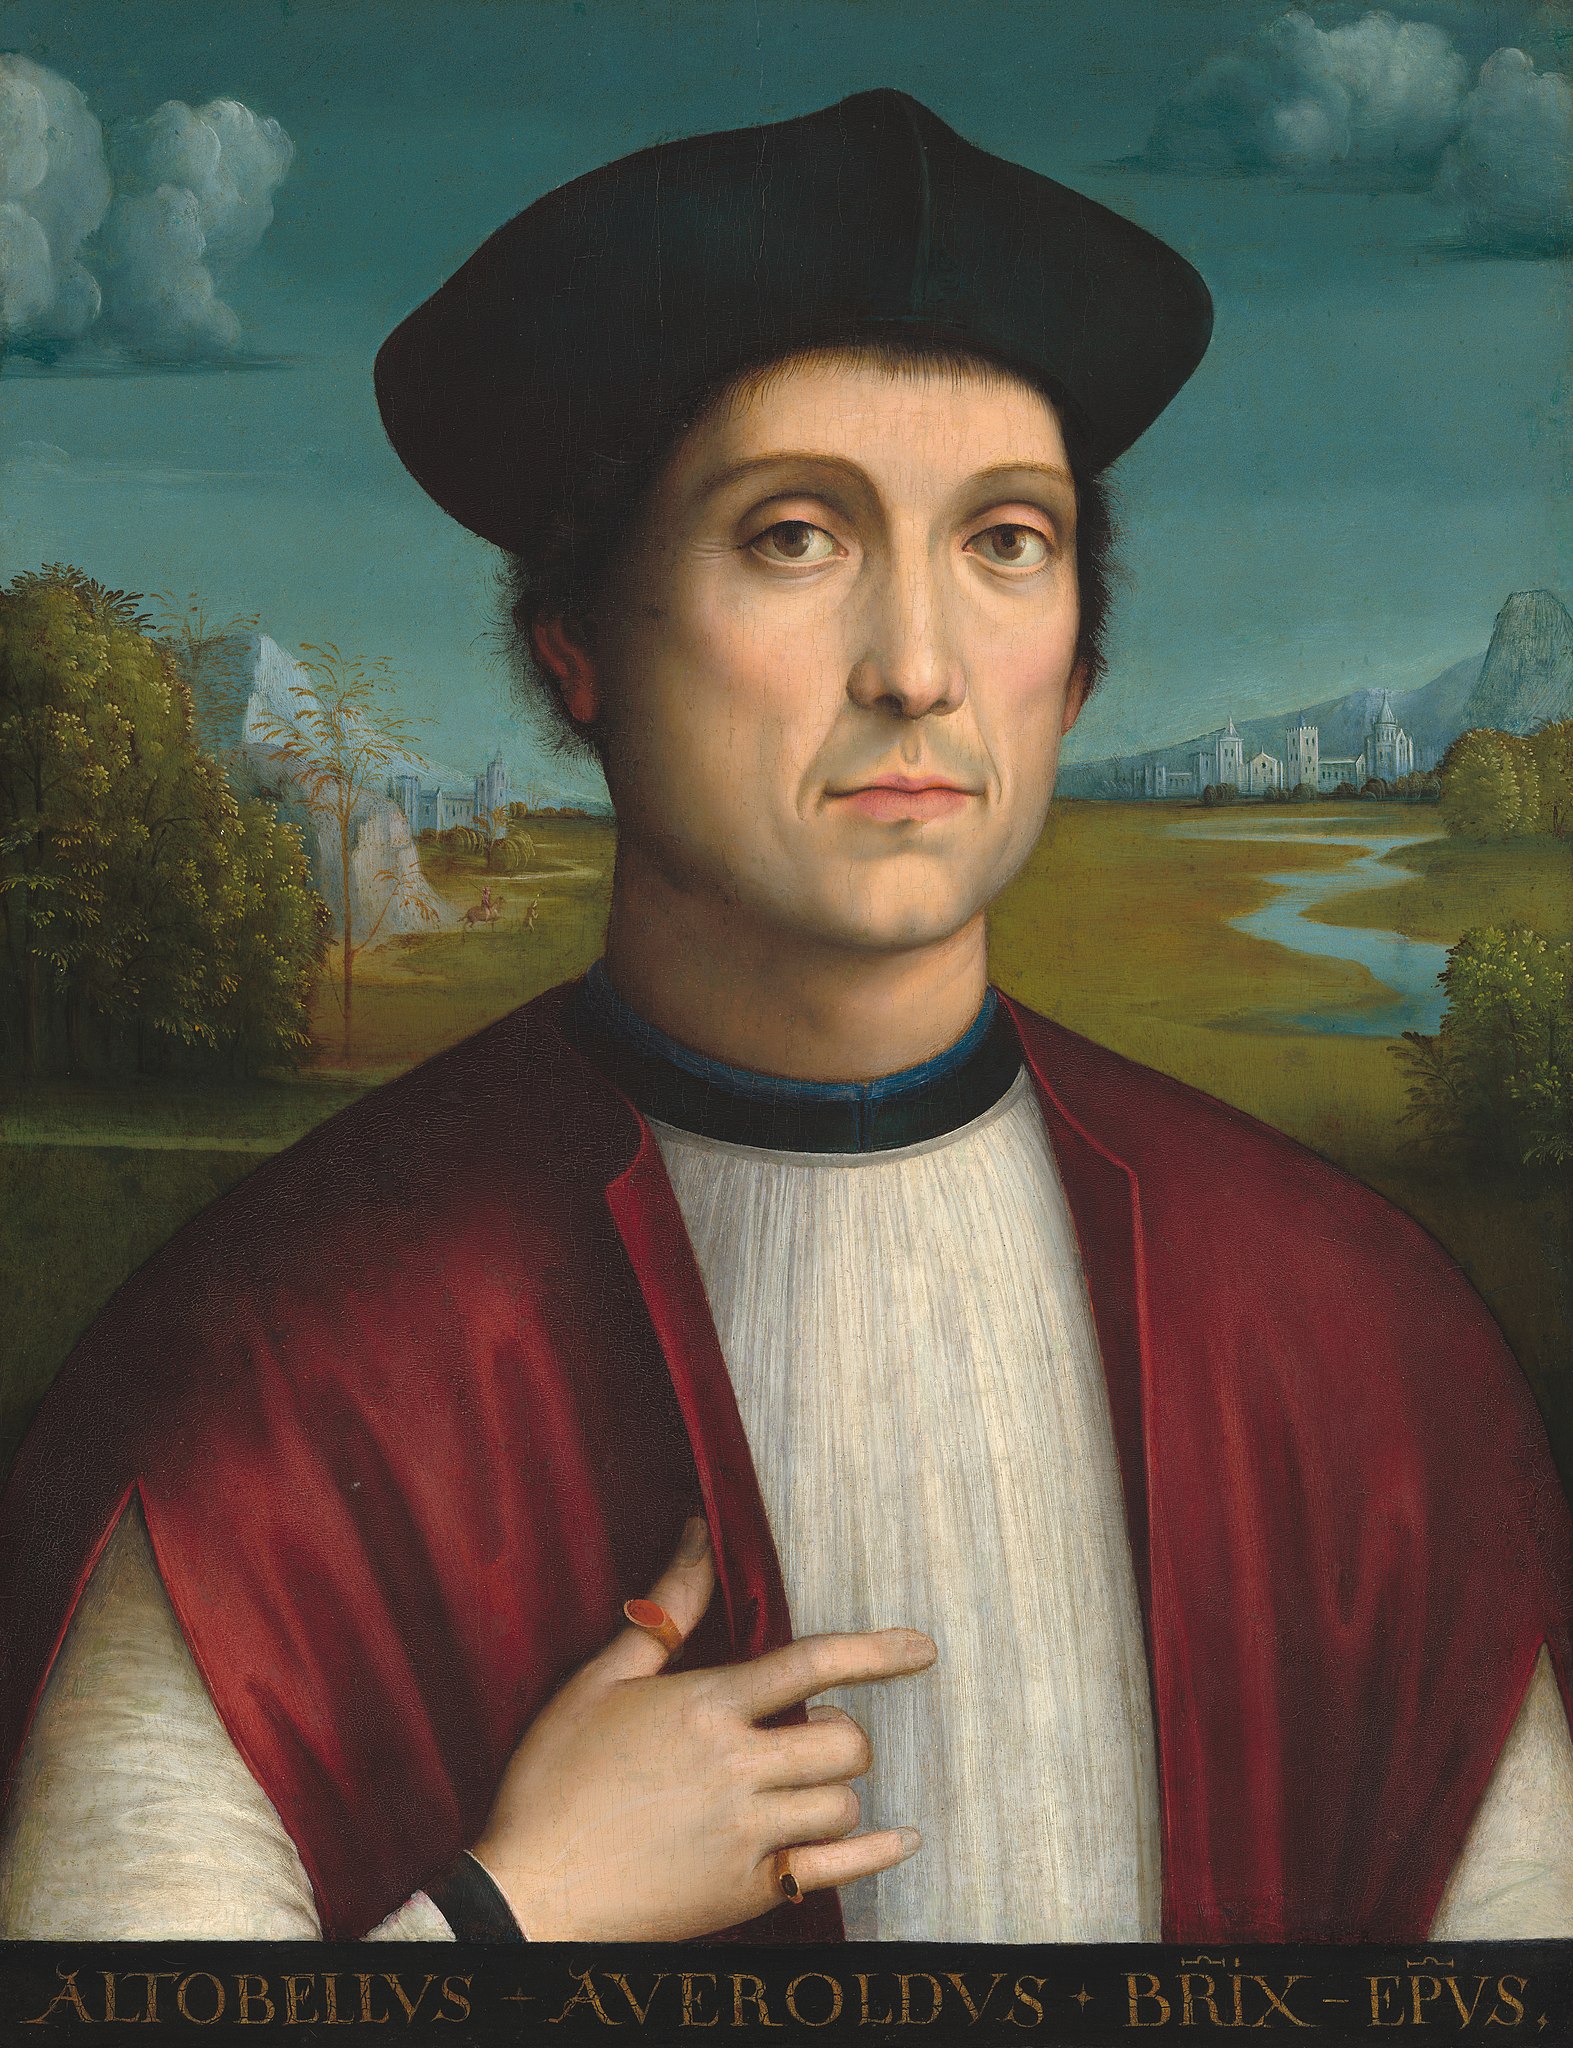 Francesco Francia, Ritratto di Altobello Averoldi (1505 circa; olio su tavola, 52,8 x 40 cm; Washington, National Gallery of Art, Samuel H. Kress Collection)